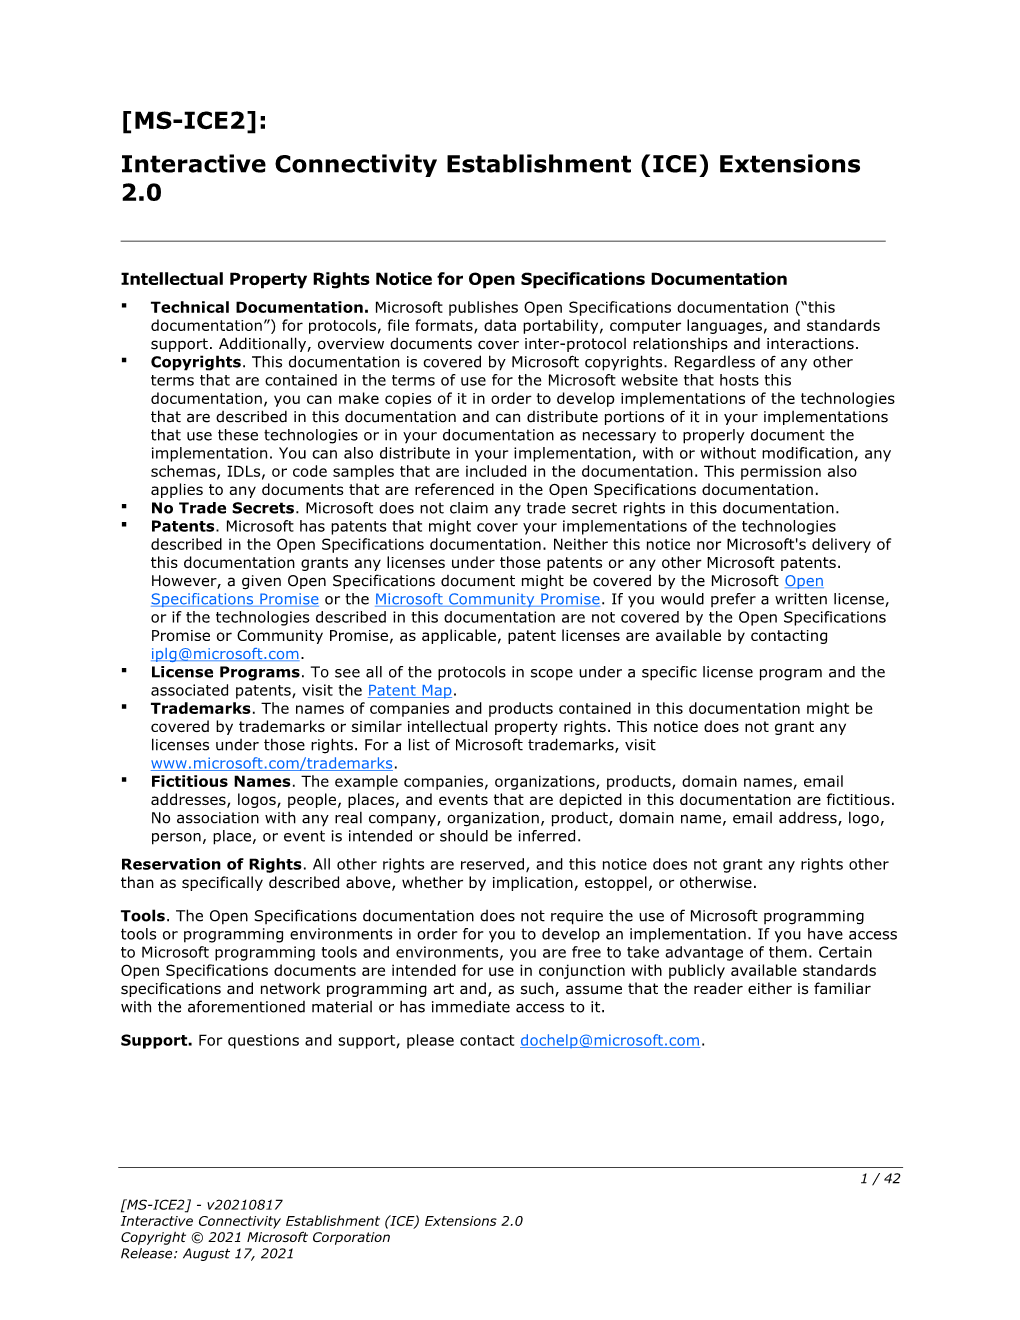 [MS-ICE2]: Interactive Connectivity Establishment (ICE) Extensions 2.0